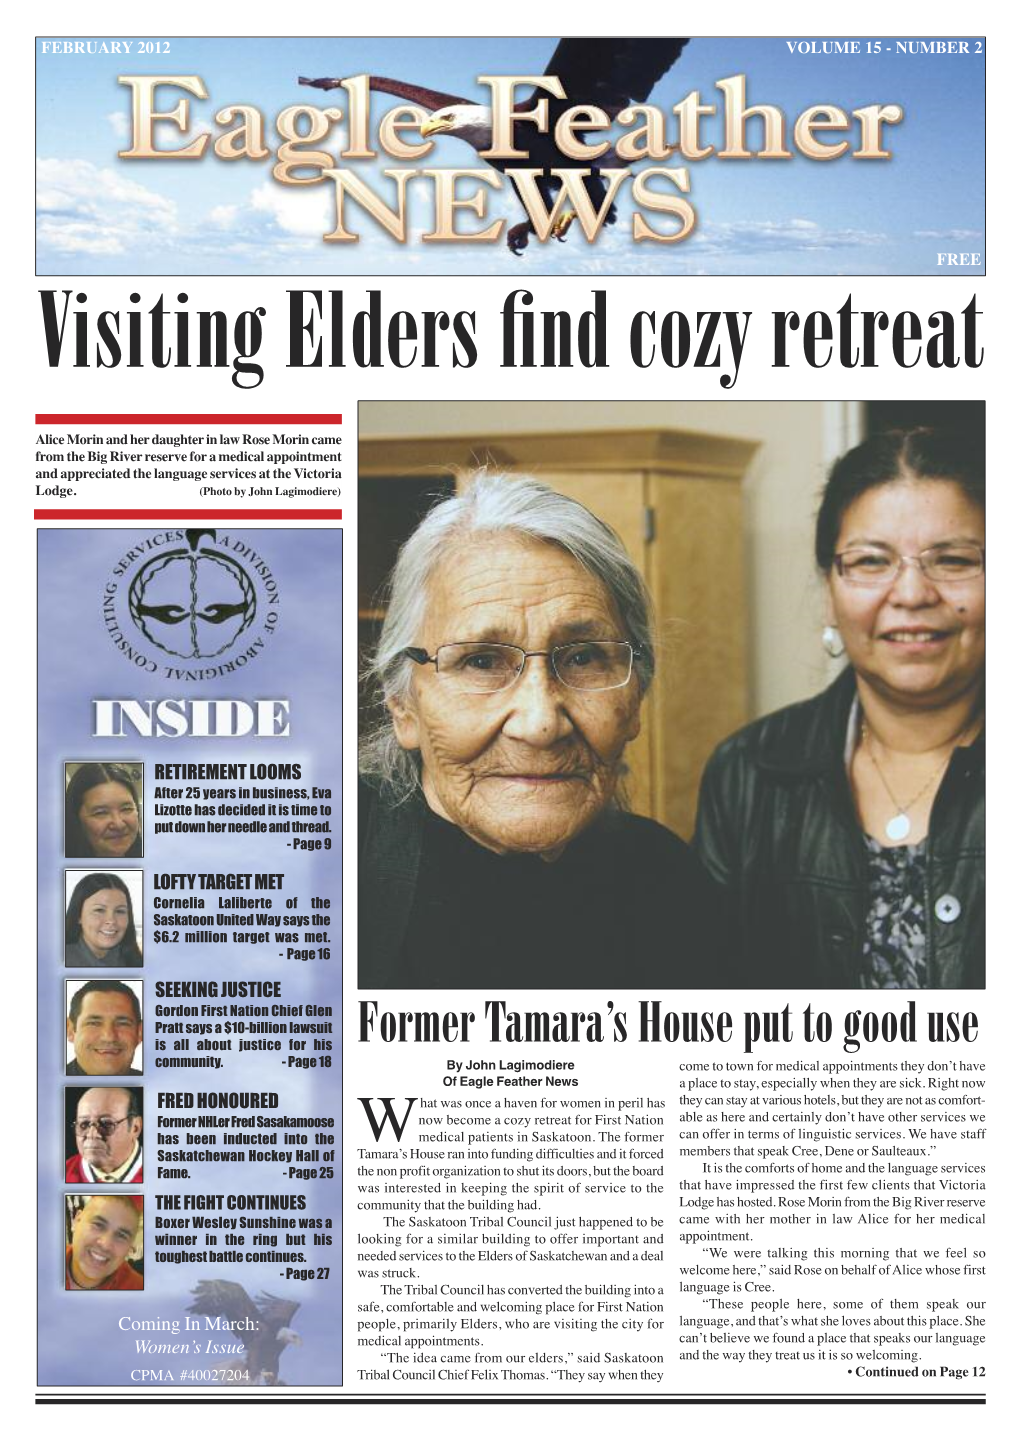 Visiting Elders Find Cozy Retreat